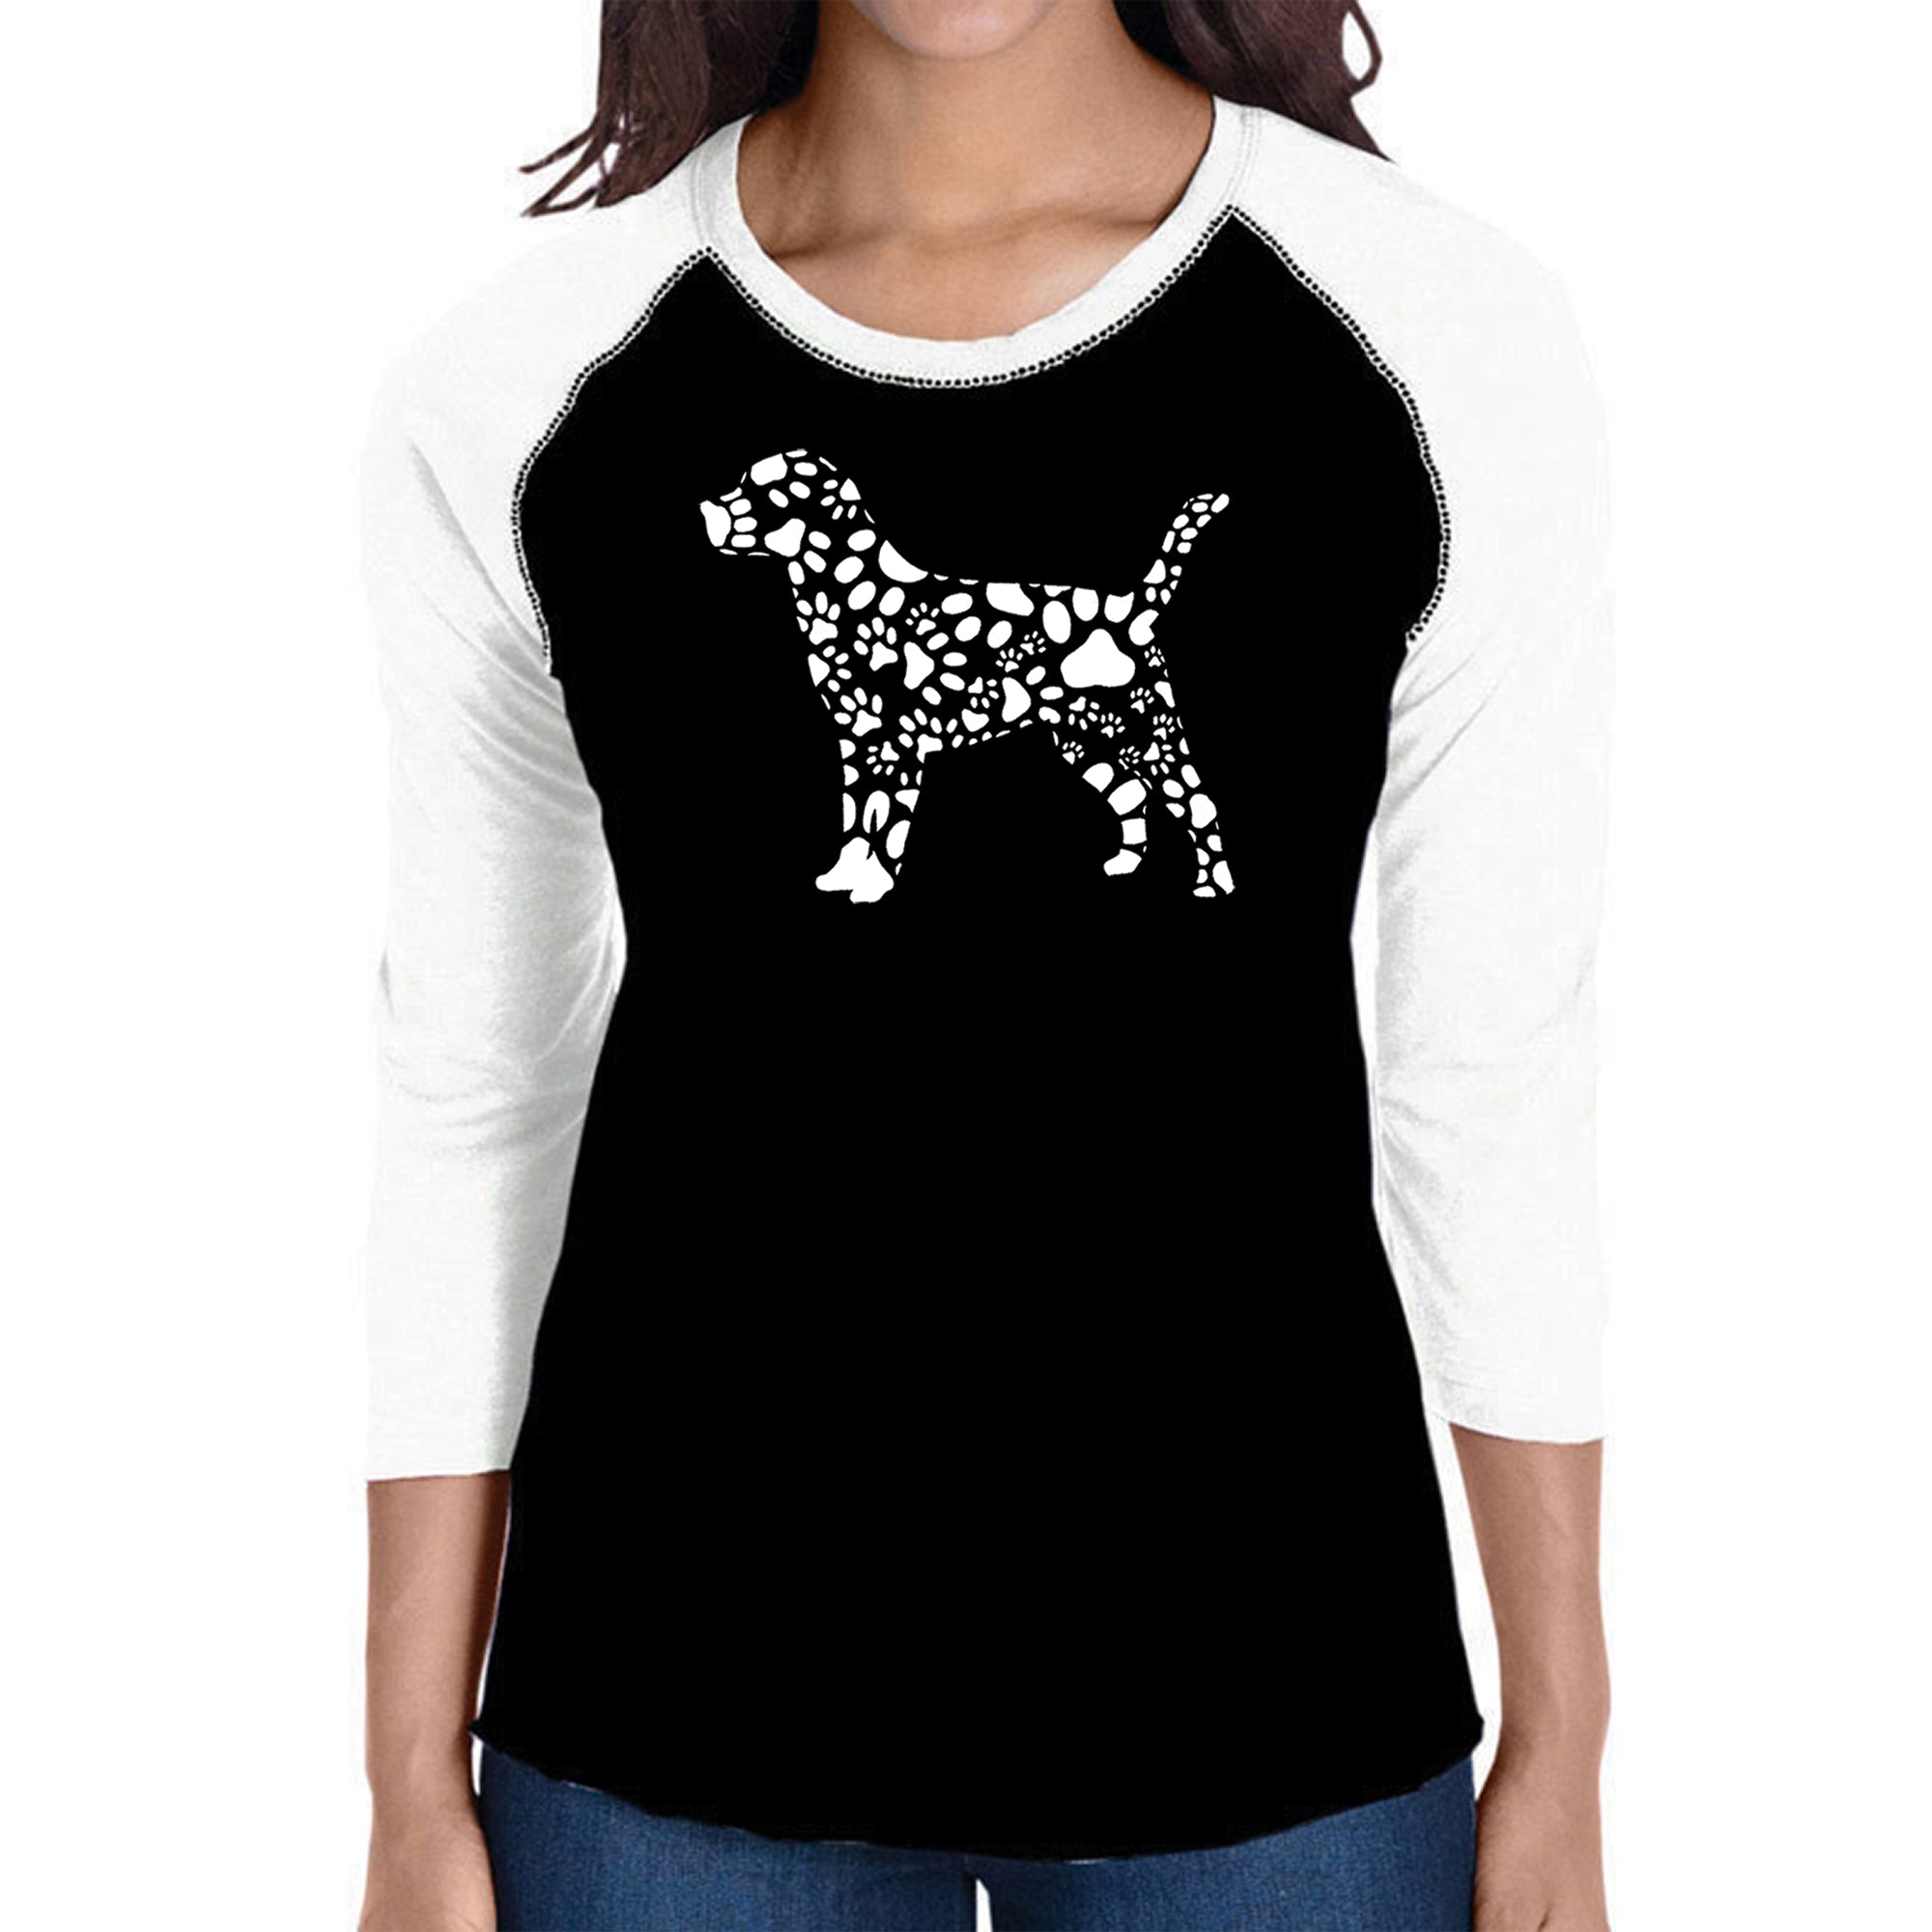 Dog Paw Prints - Women's Raglan Word Art T-Shirt - Black/White - Small